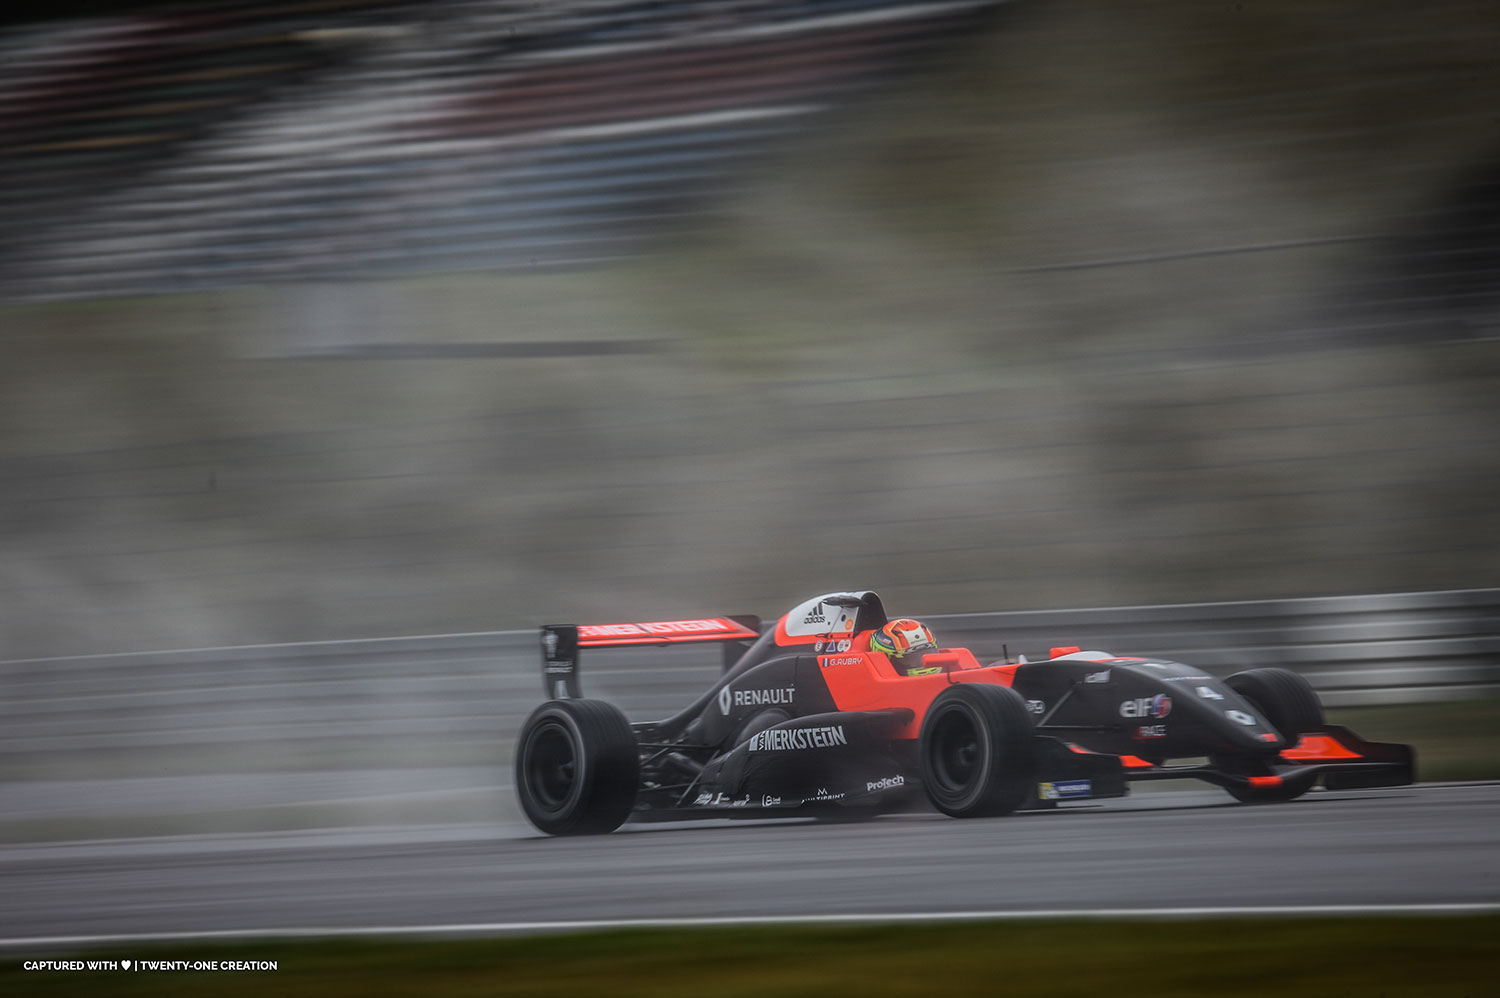 Nurburgring - Allemagne - Gabriel Aubry - Gabi-Aubry - Formule Renault 2.0 - Tech1.com